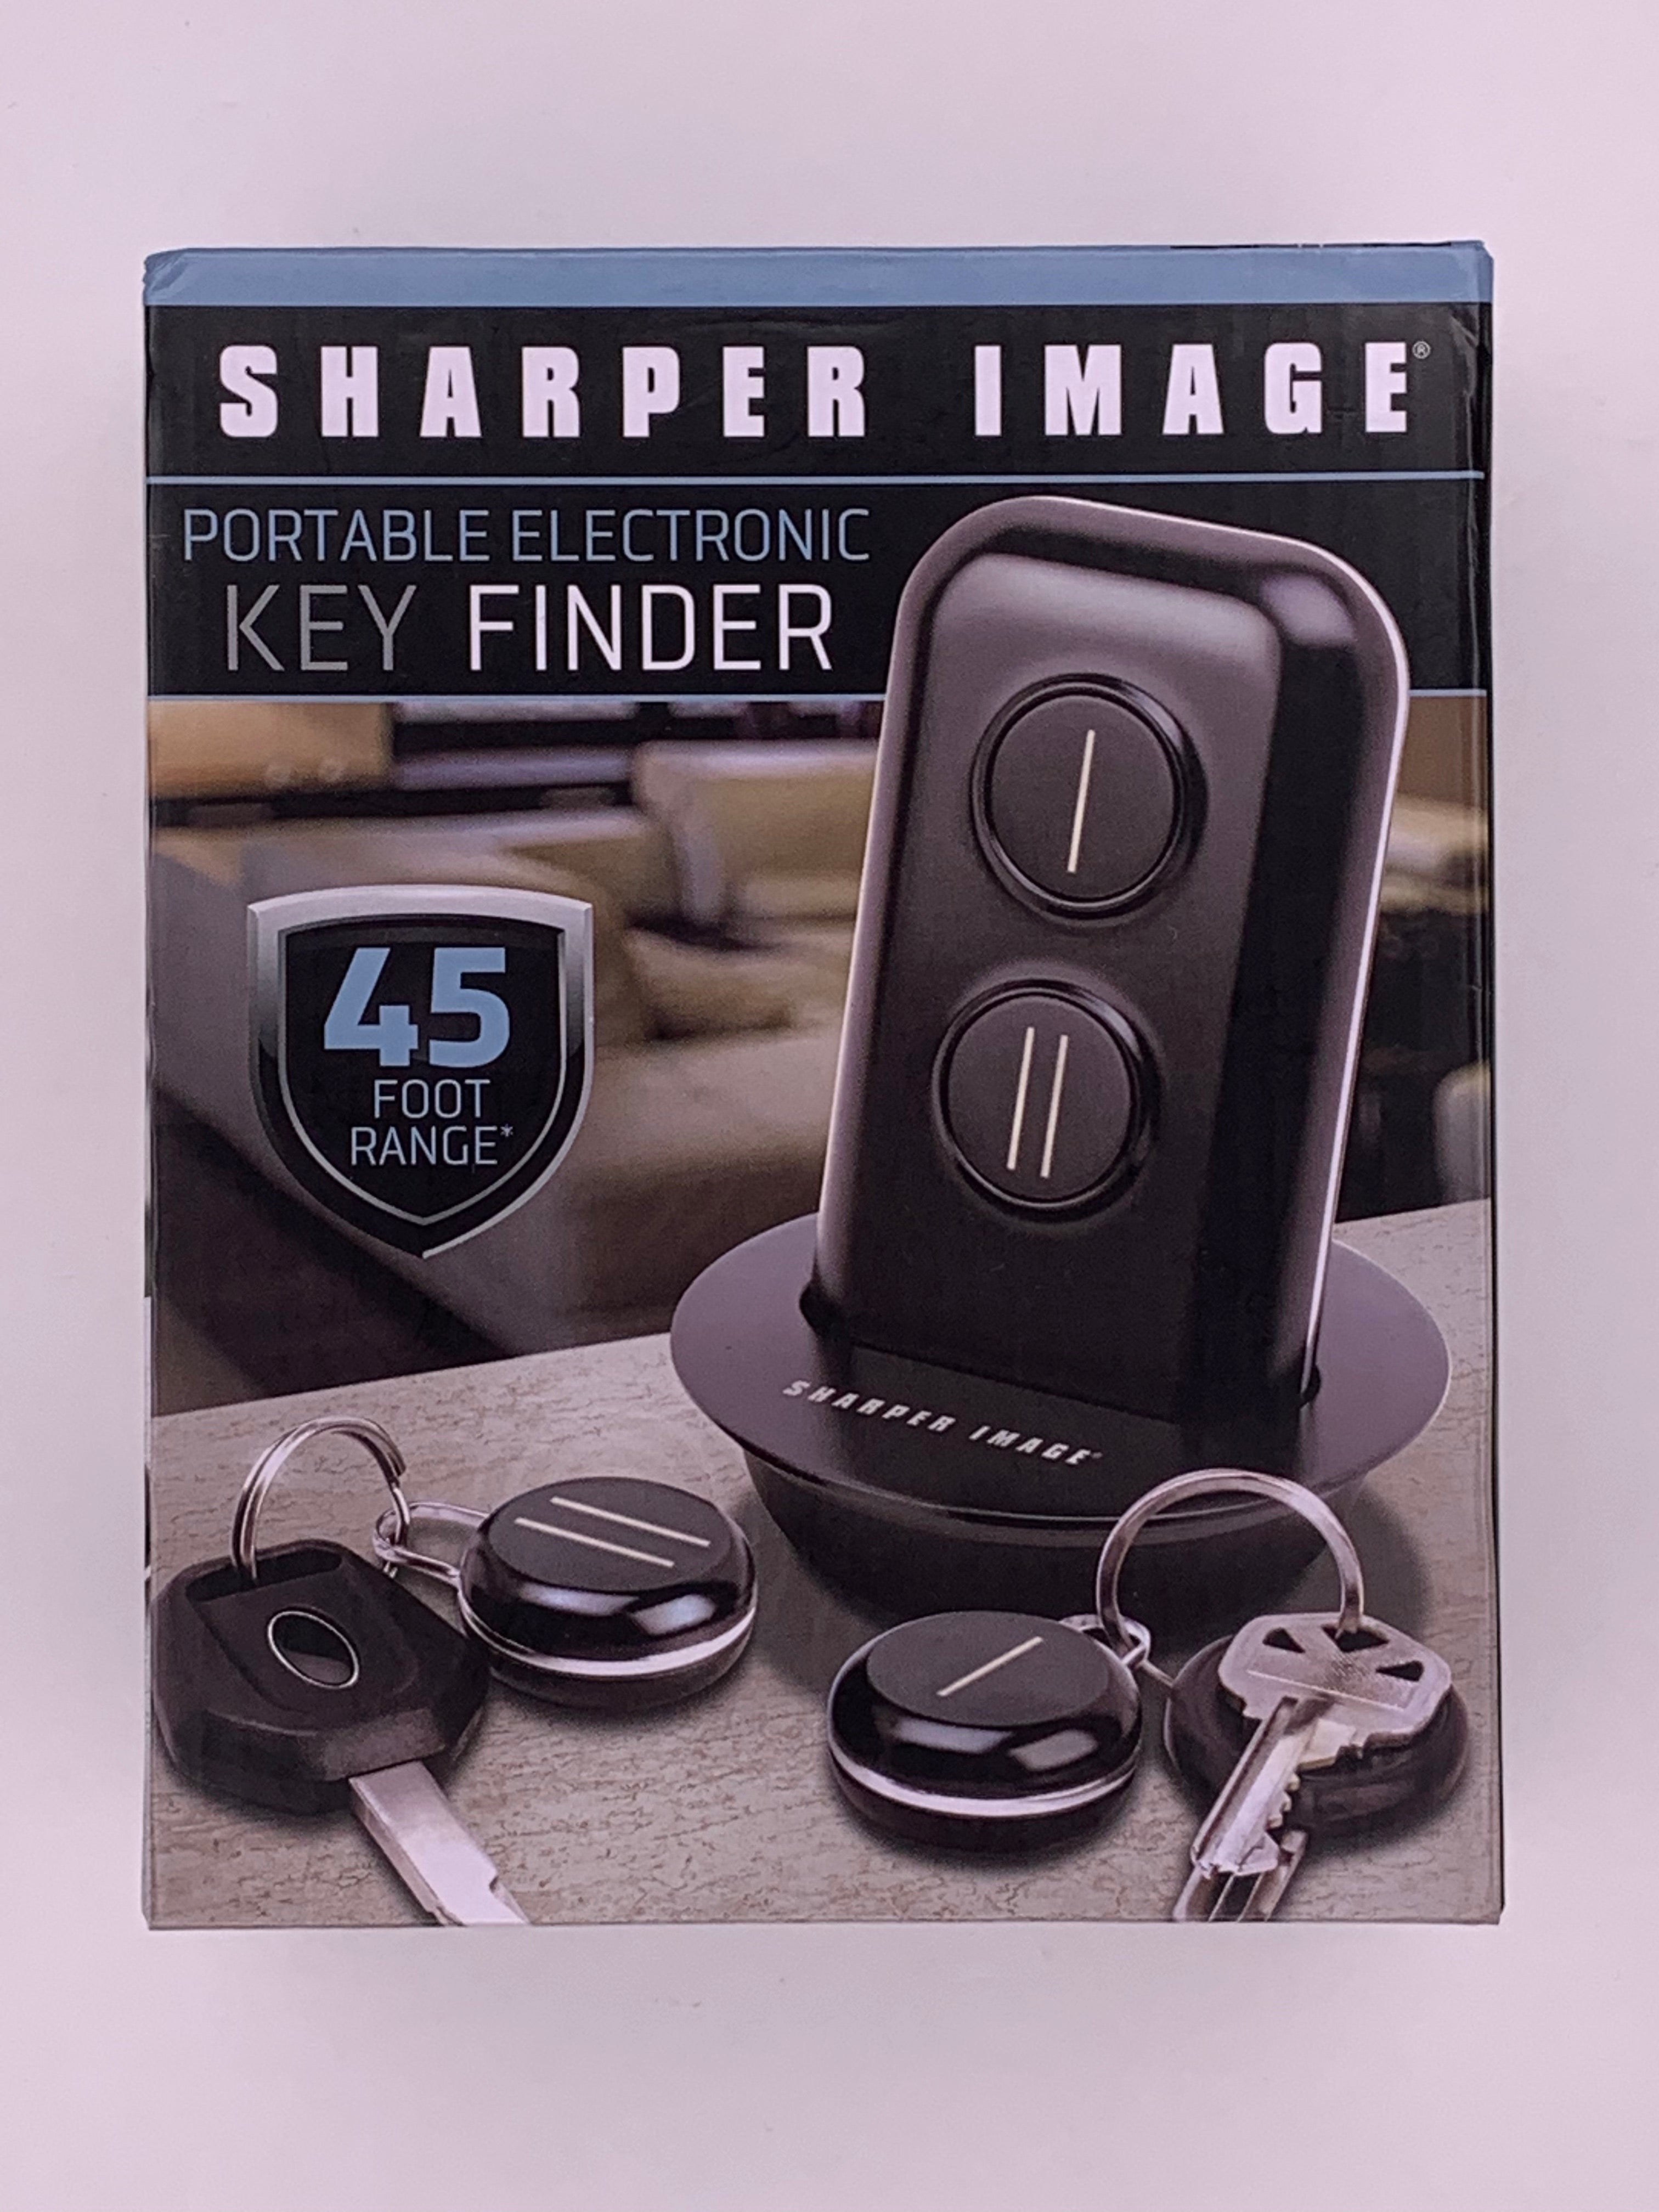 Sharper Image Portable Electronic Key Finder 45 Foot Range Black Two Fobs Wireless Alarm